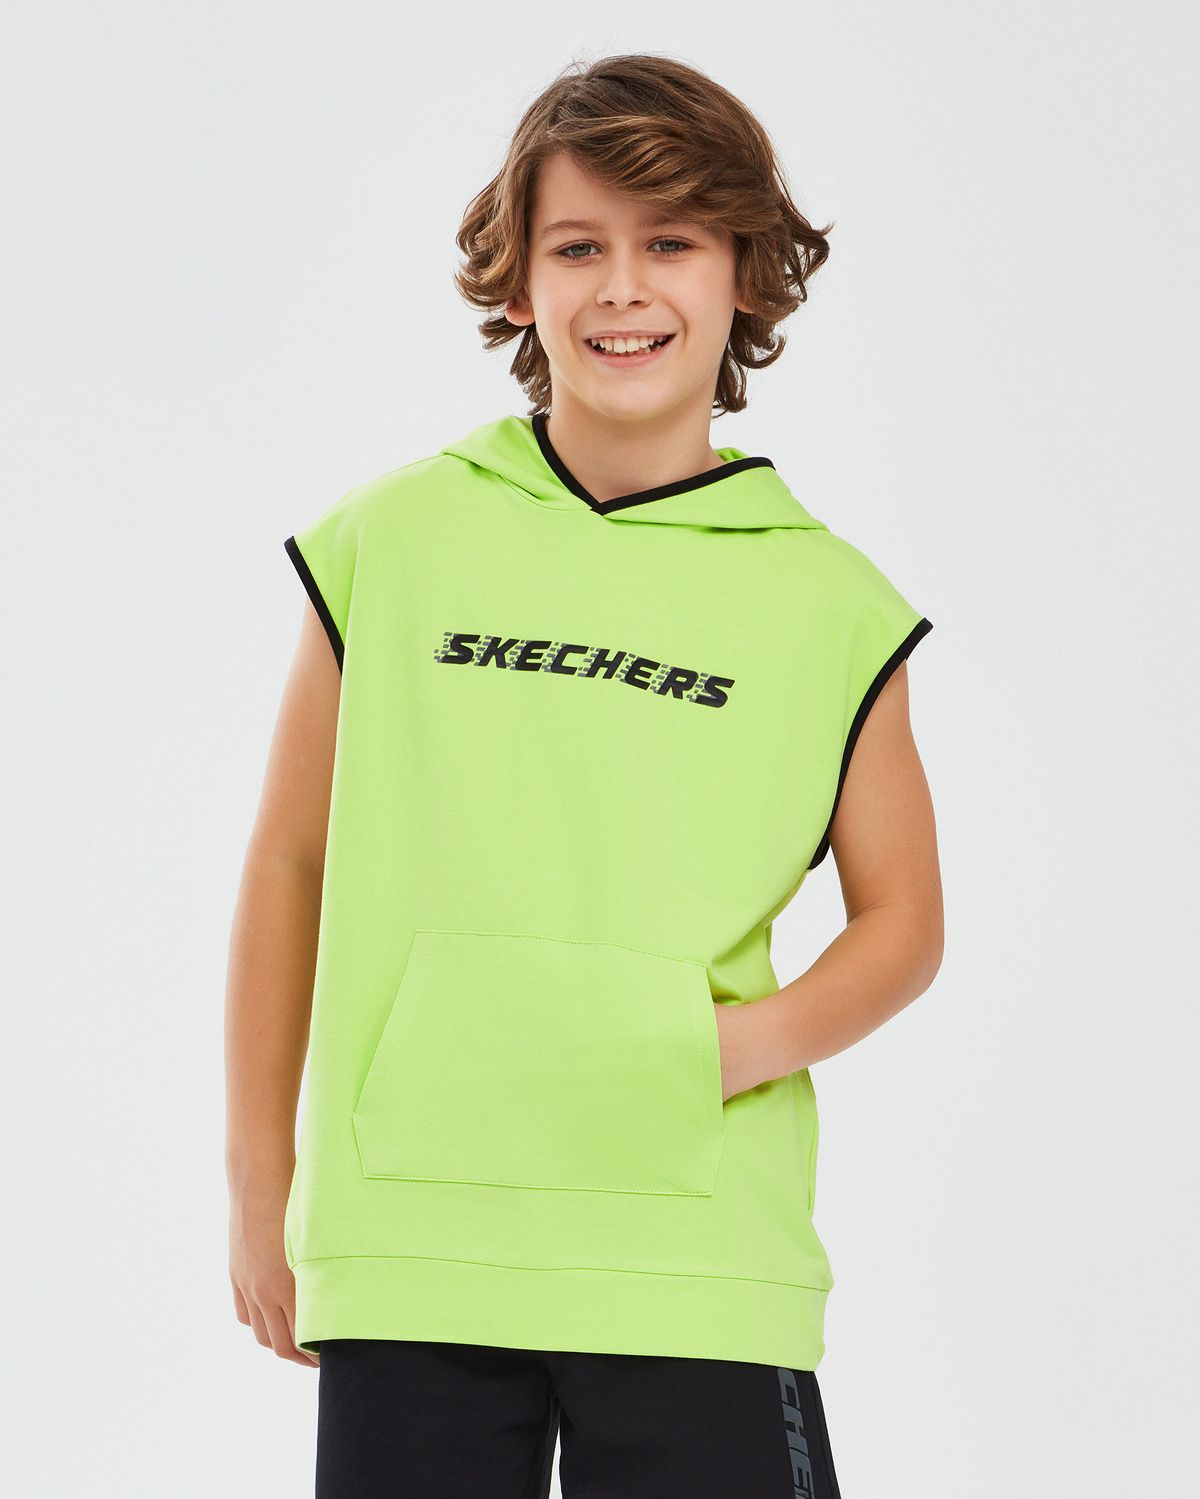 Skechers Lightweight Fleece Two Yarn B Sleeveless Hoodie Sweatshirt Büyük Erkek Çocuk Neon Yeşil Sweatshirt S